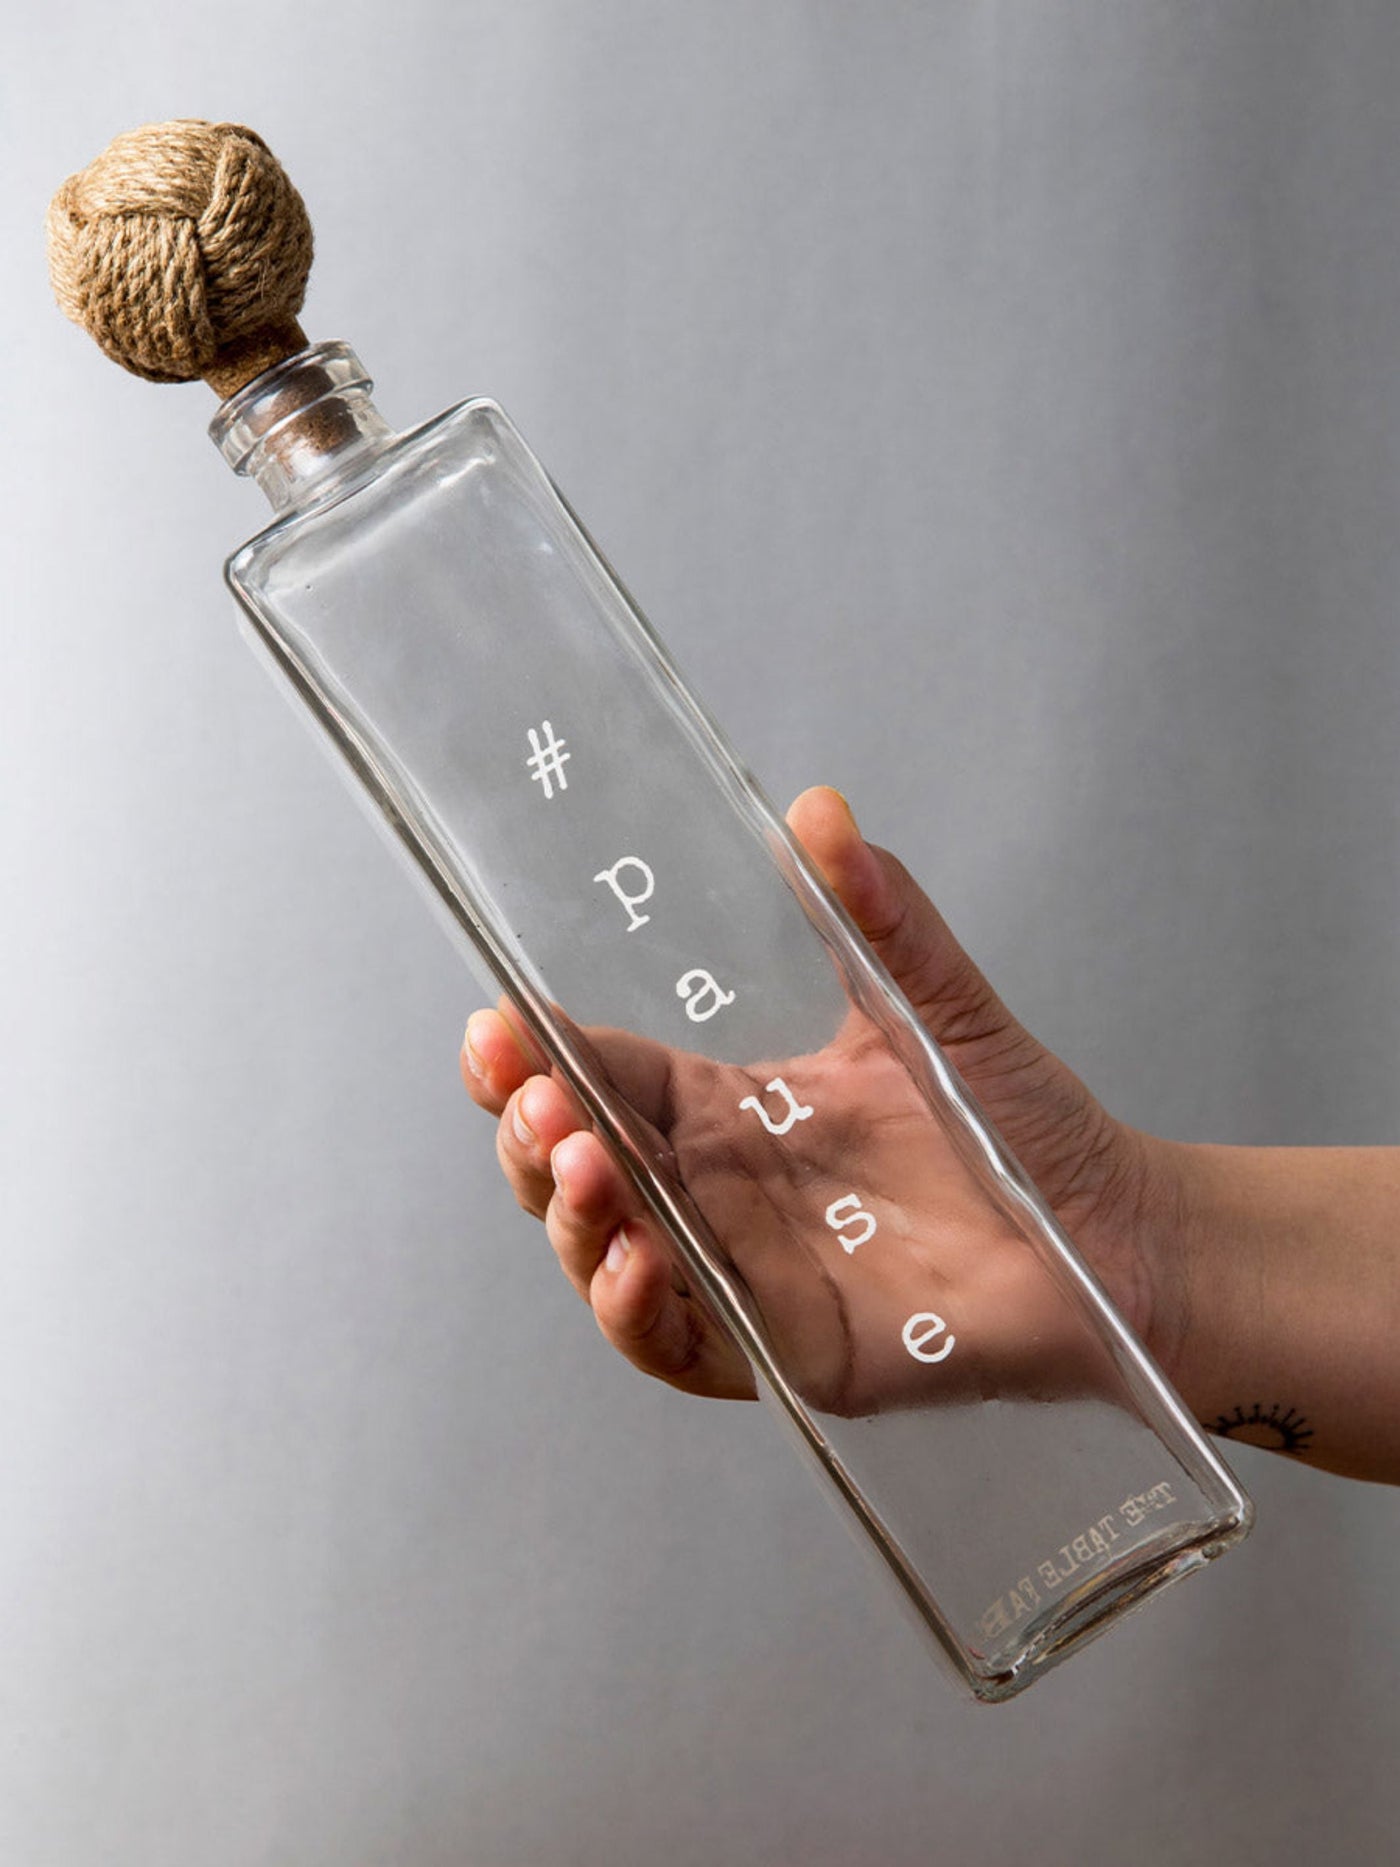 Water bottle - #pause